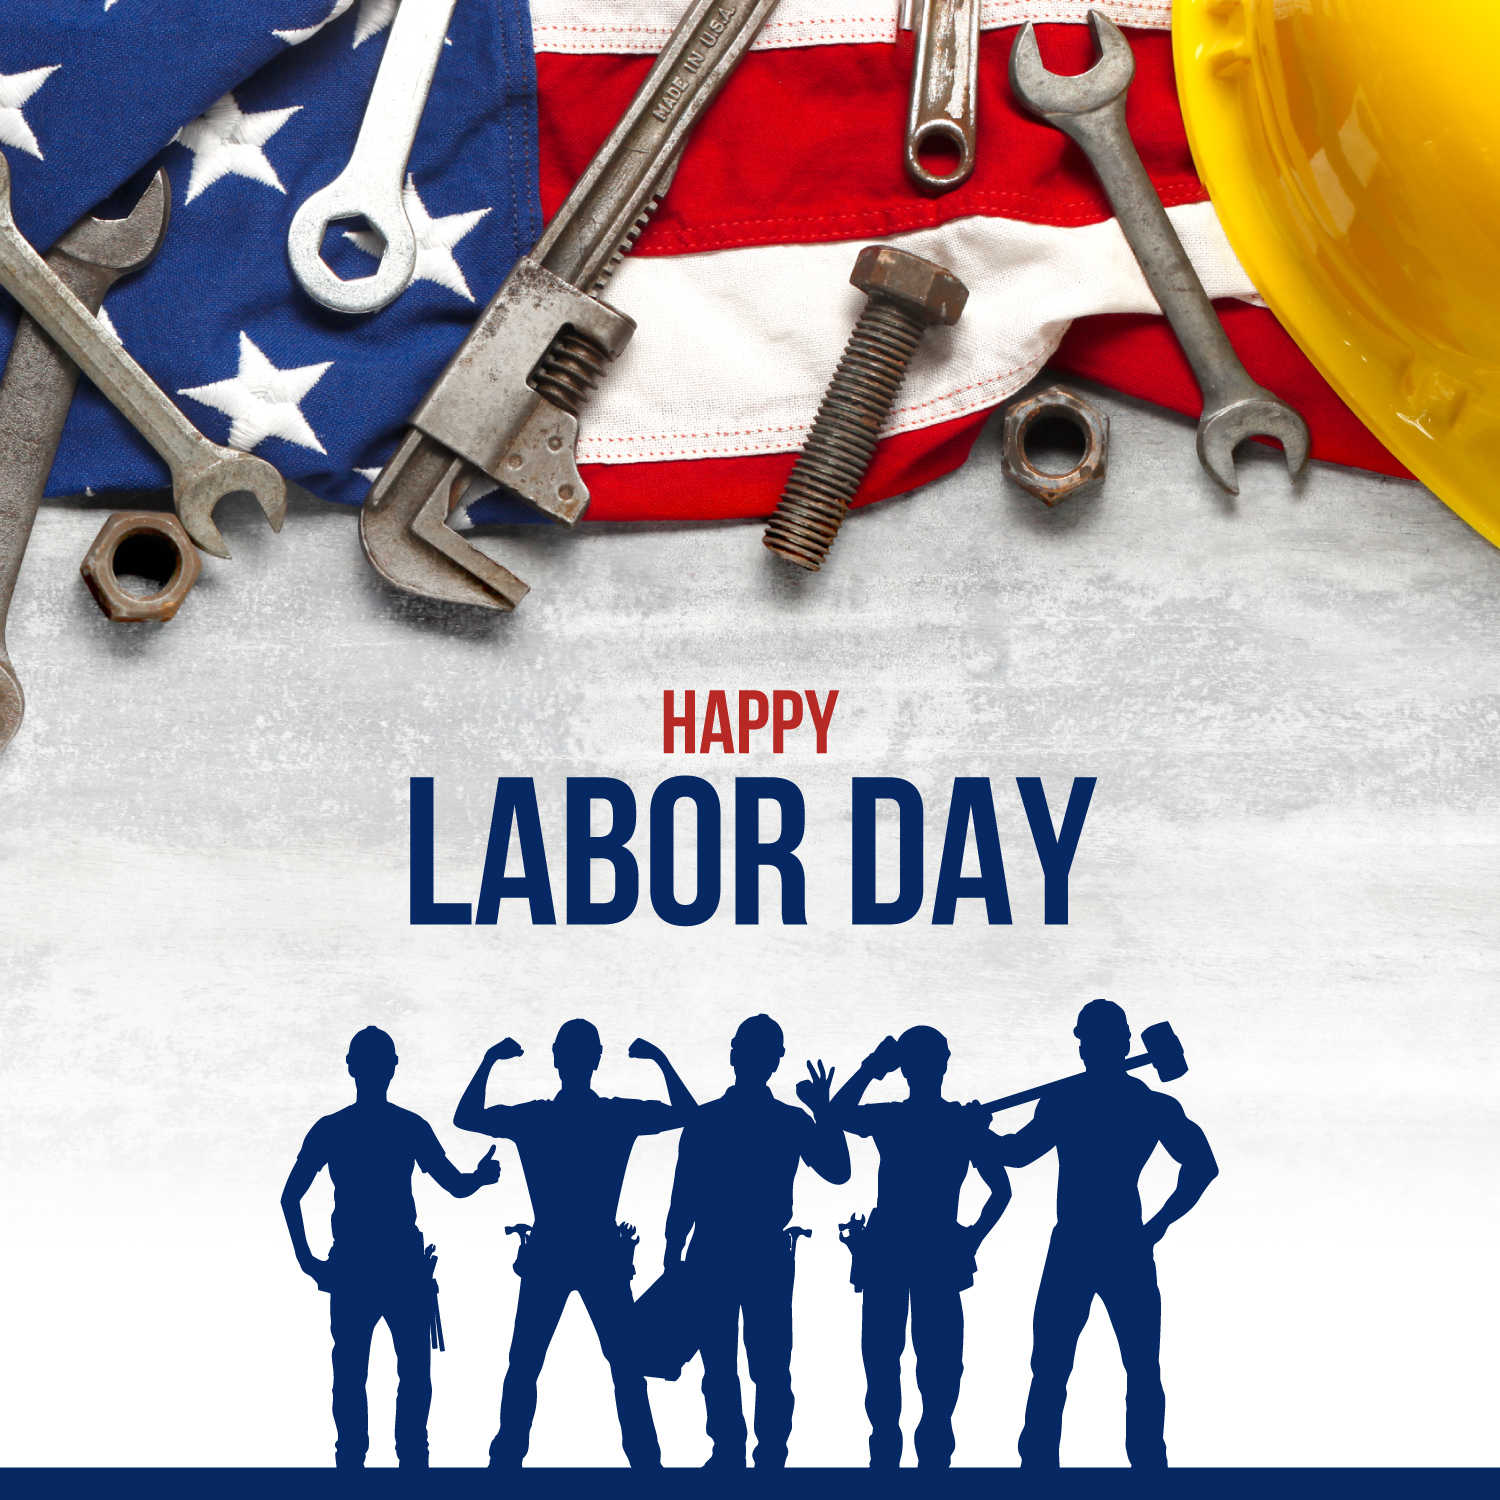 September 6th, Labor Day